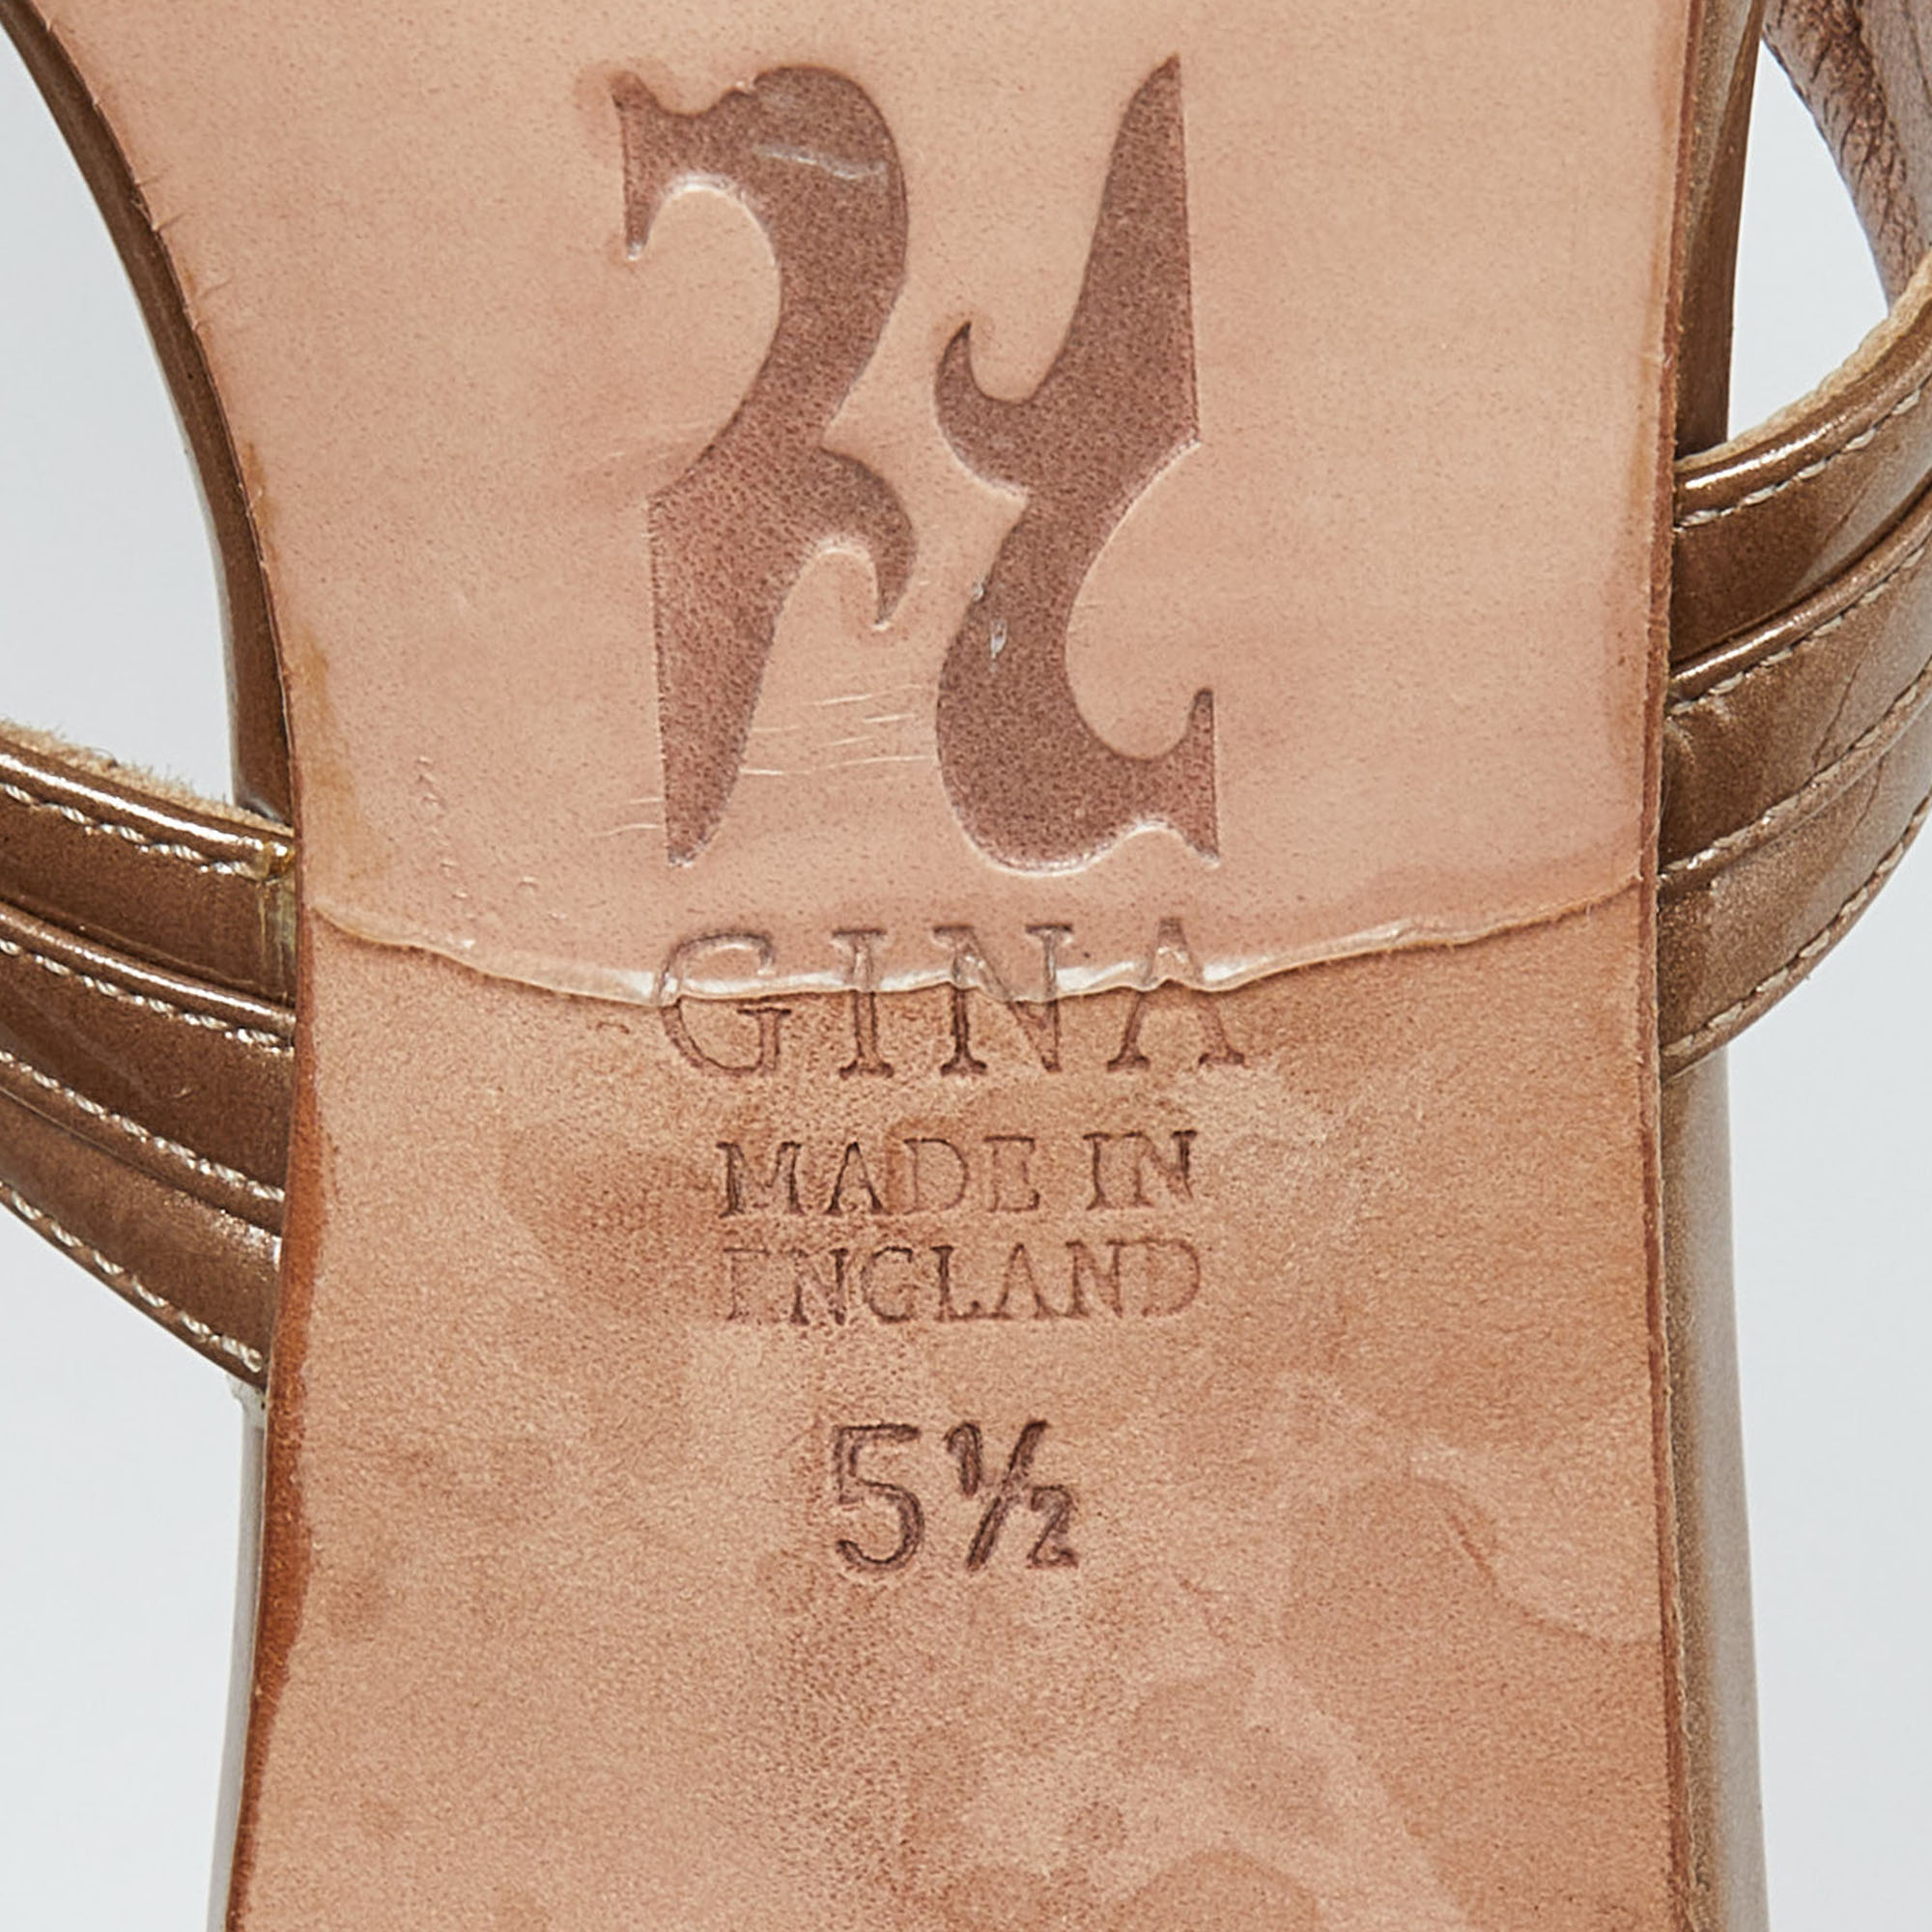 Gina Brown Patent Leather Crystal Embellished Thong Slide Sandals Size 38.5